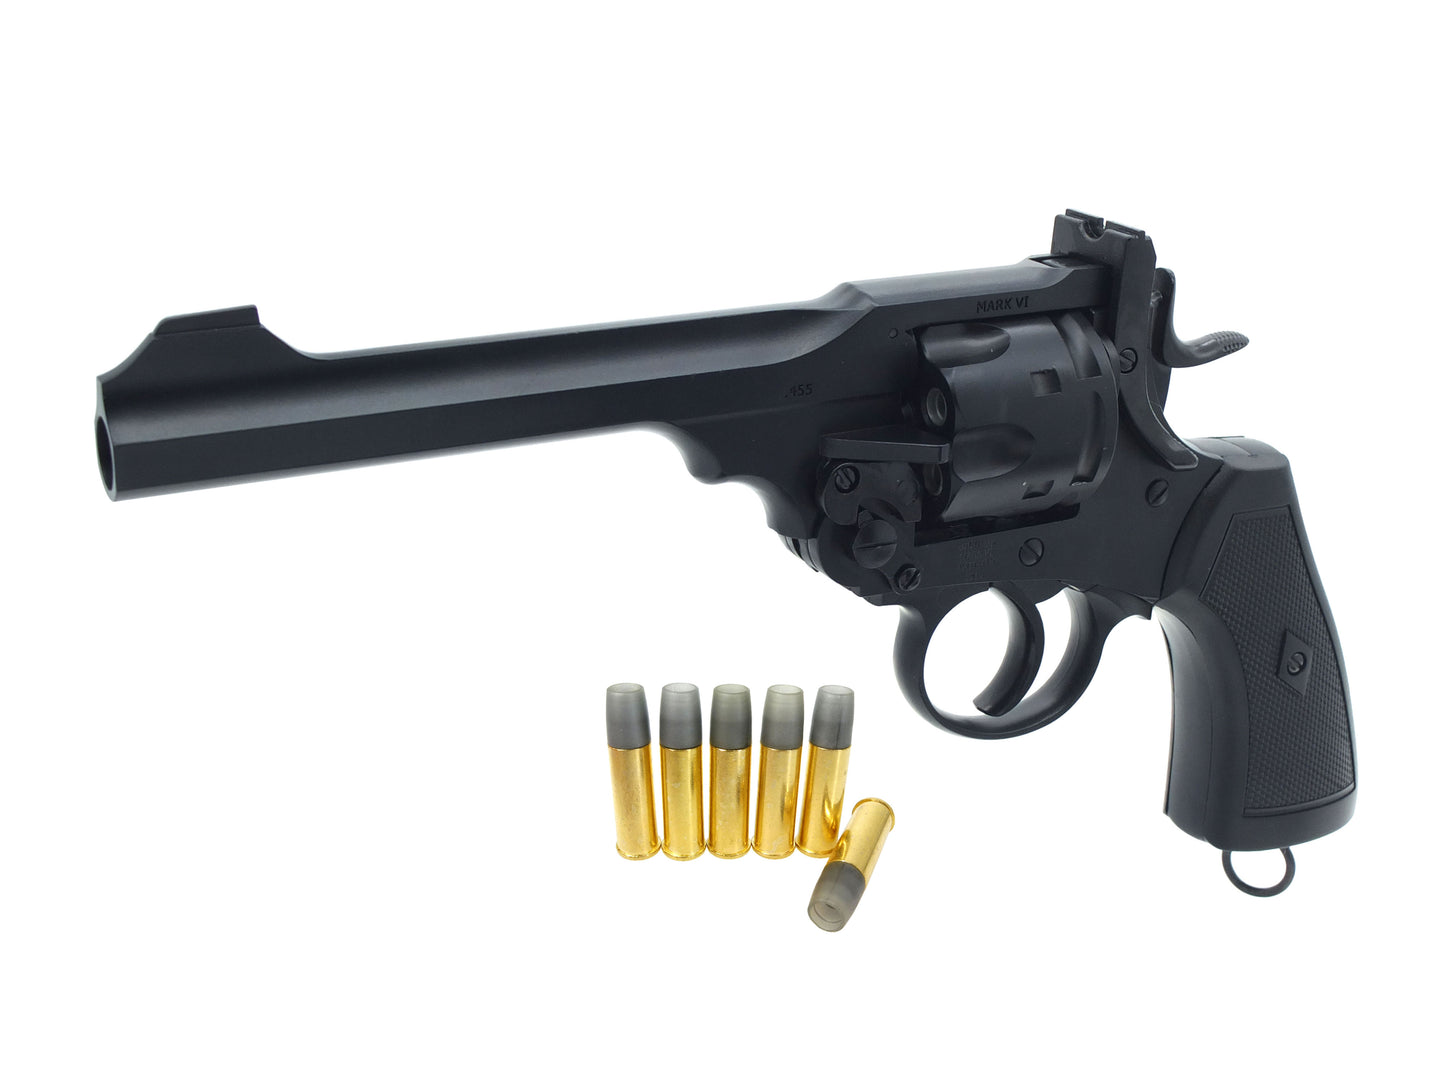 GUN HEAVEN ウェブリー MK VI 6インチ 中折れ式 CO2ガスリボルバー メタルパーツ セット.